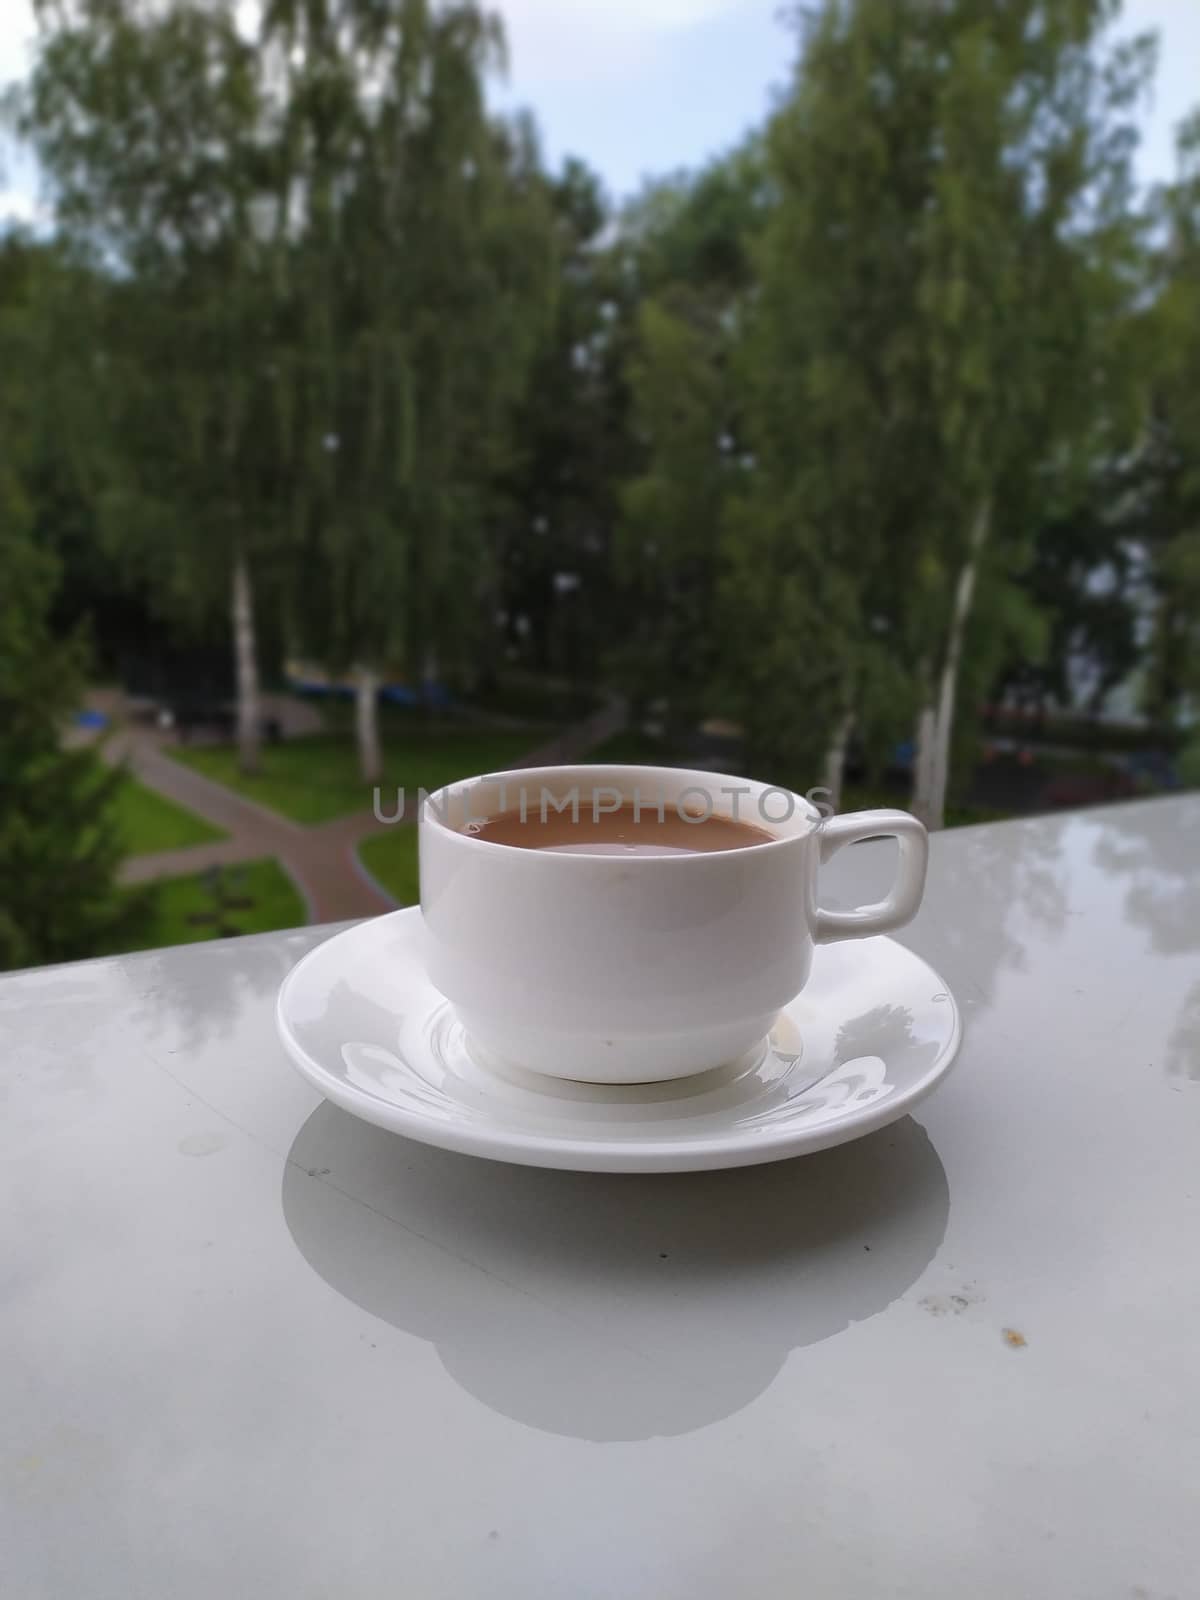 morning coffee on the windowsill of the balcony